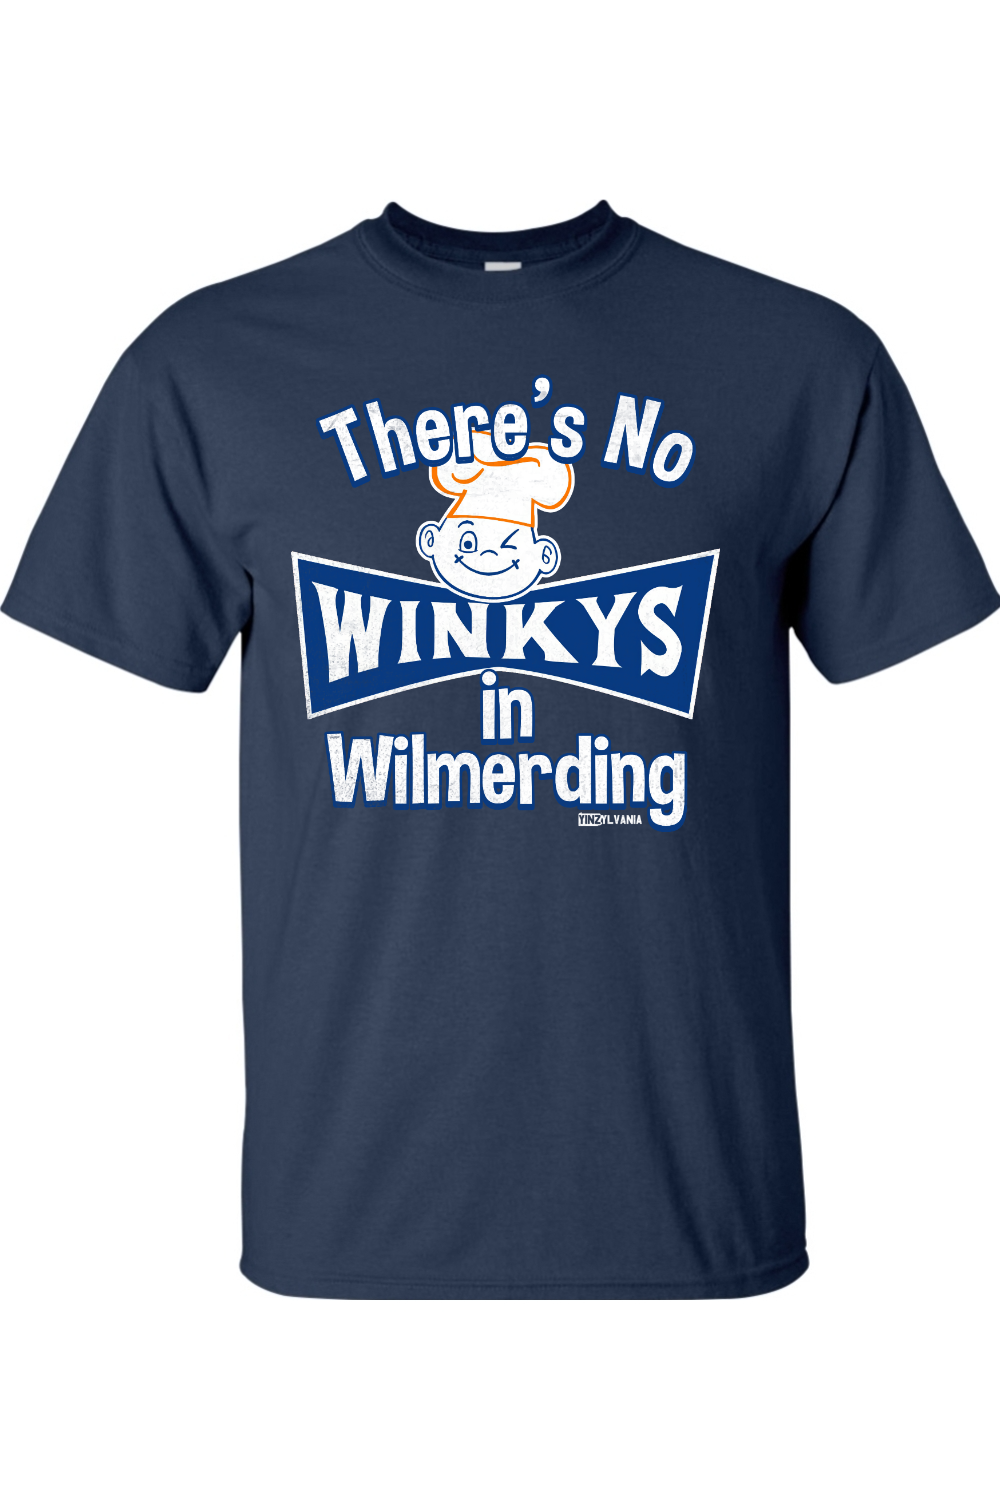 There's No Winkys in Wilmerding - Gildan Heavy Cotton T-Shirt - Yinzylvania